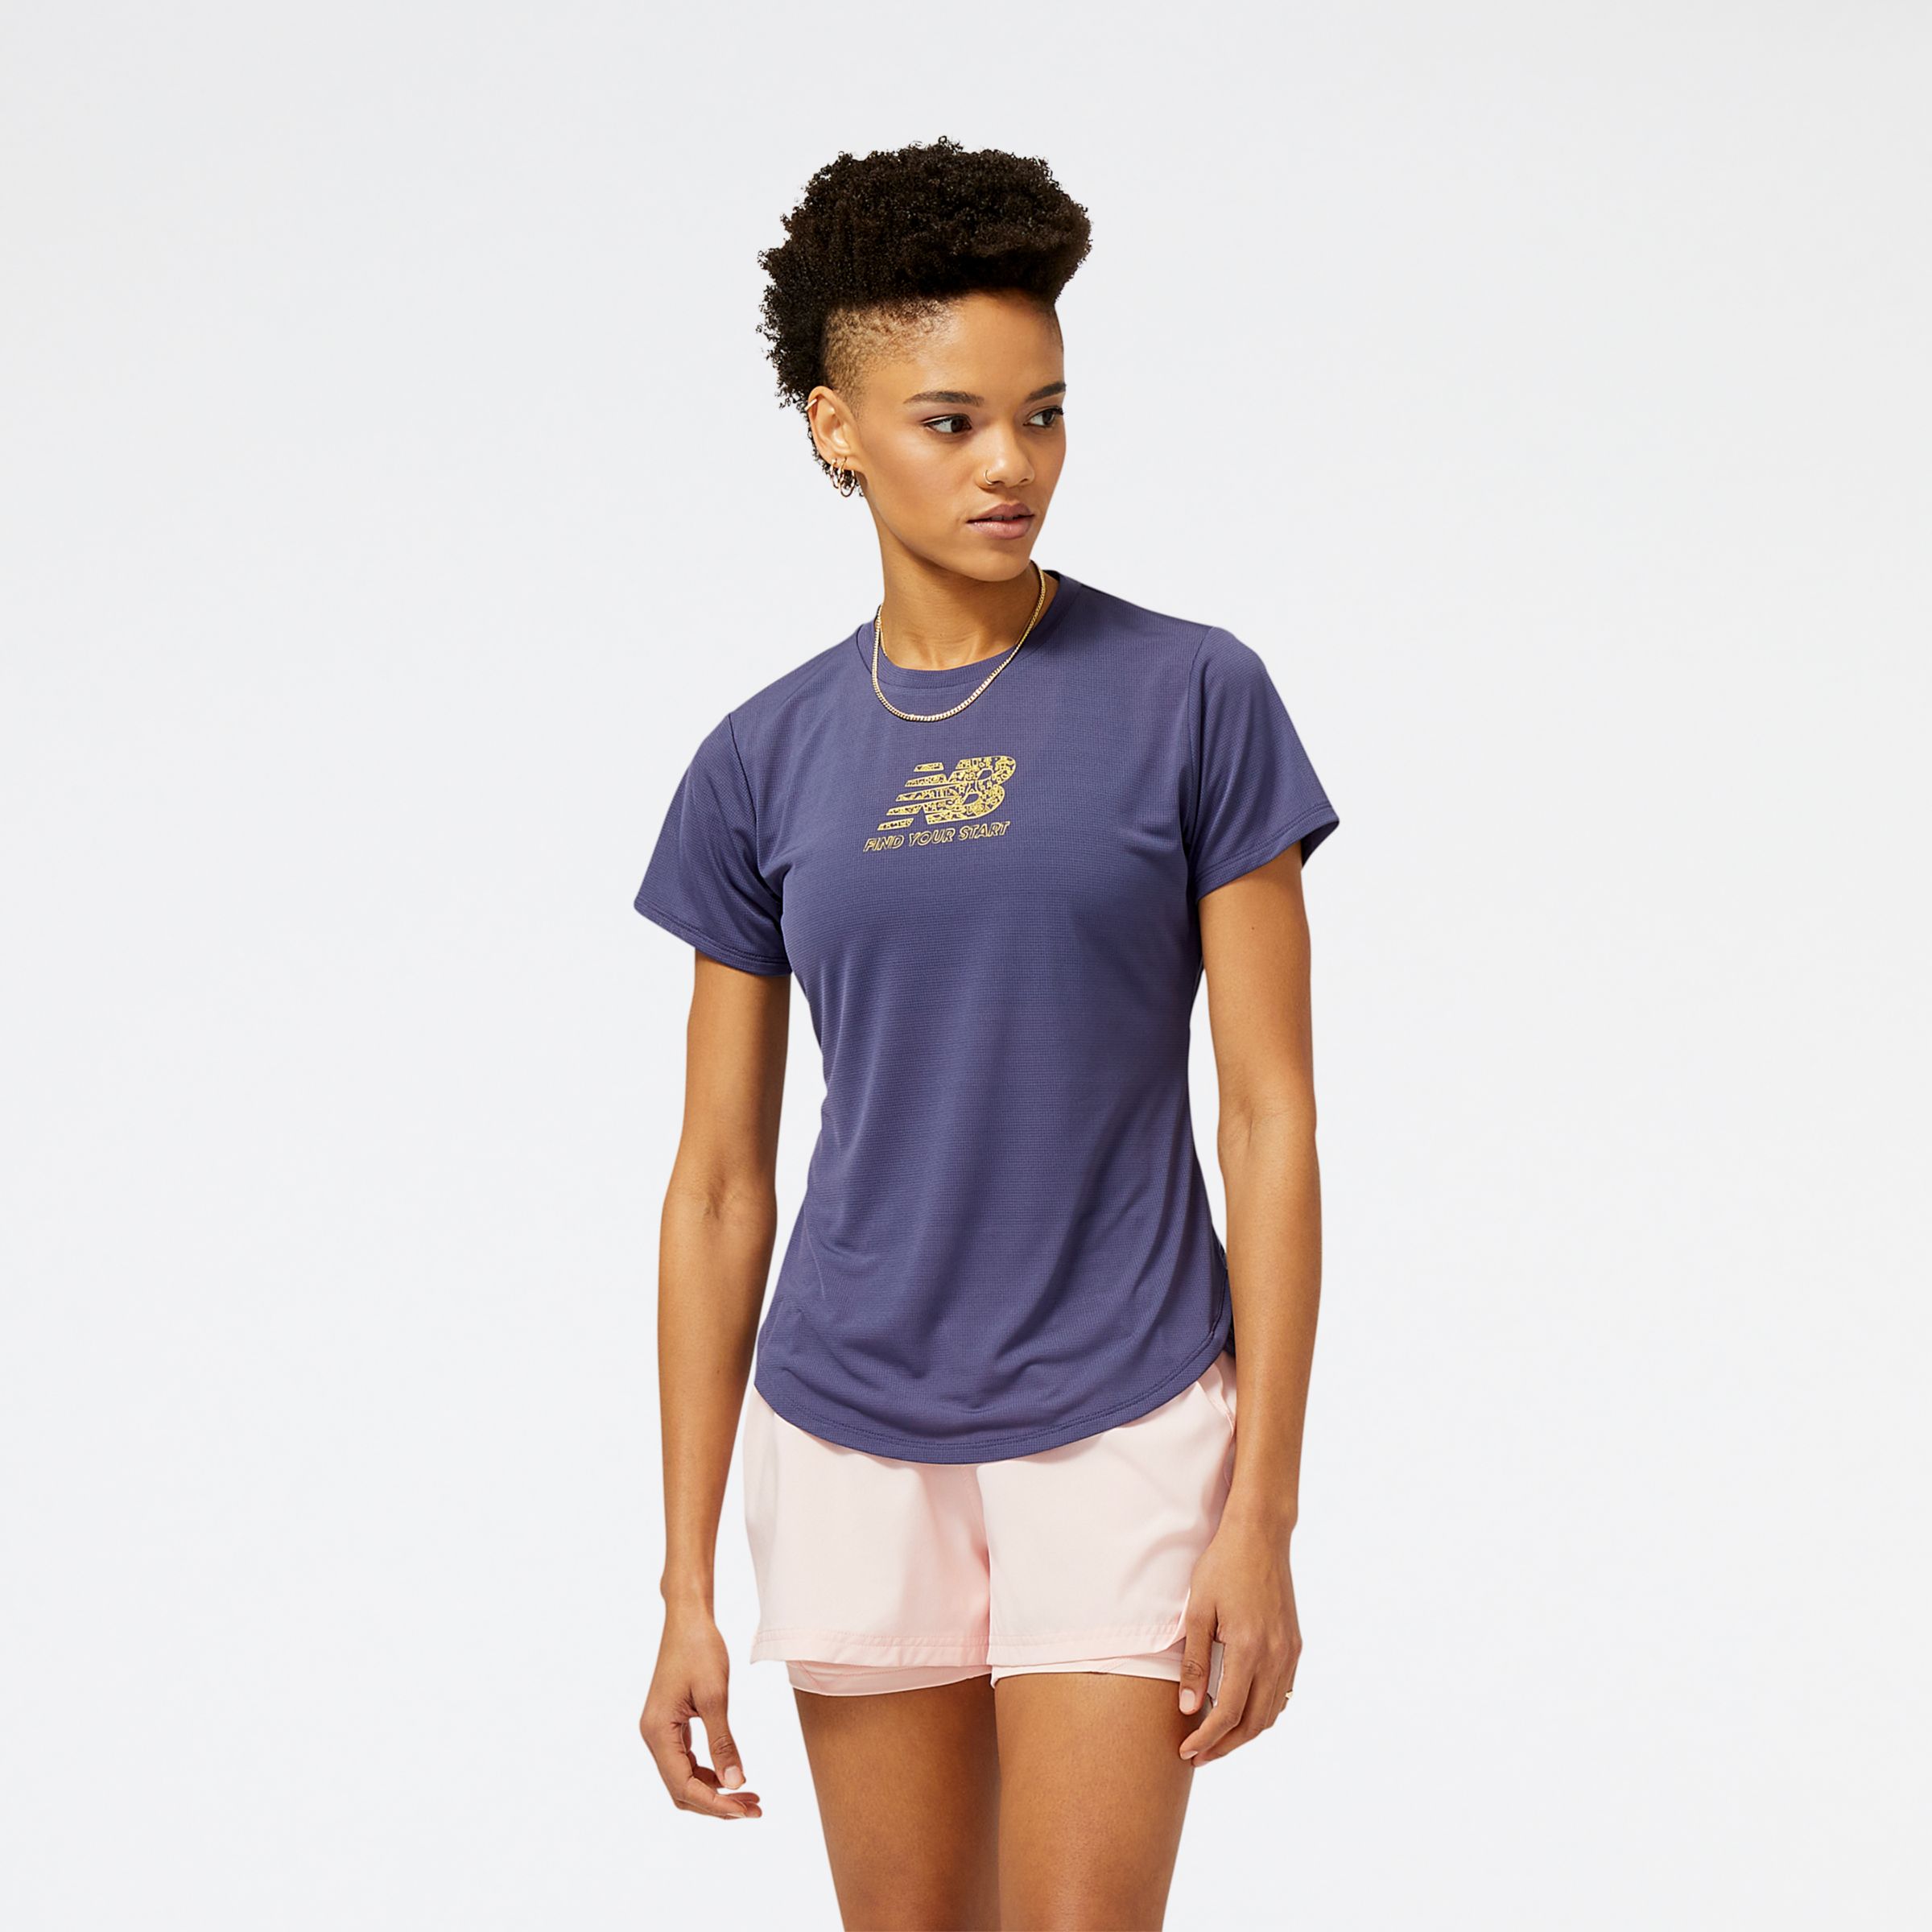 

New Balance Women's Graphic Accelerate Short Sleeve Top Black - Black